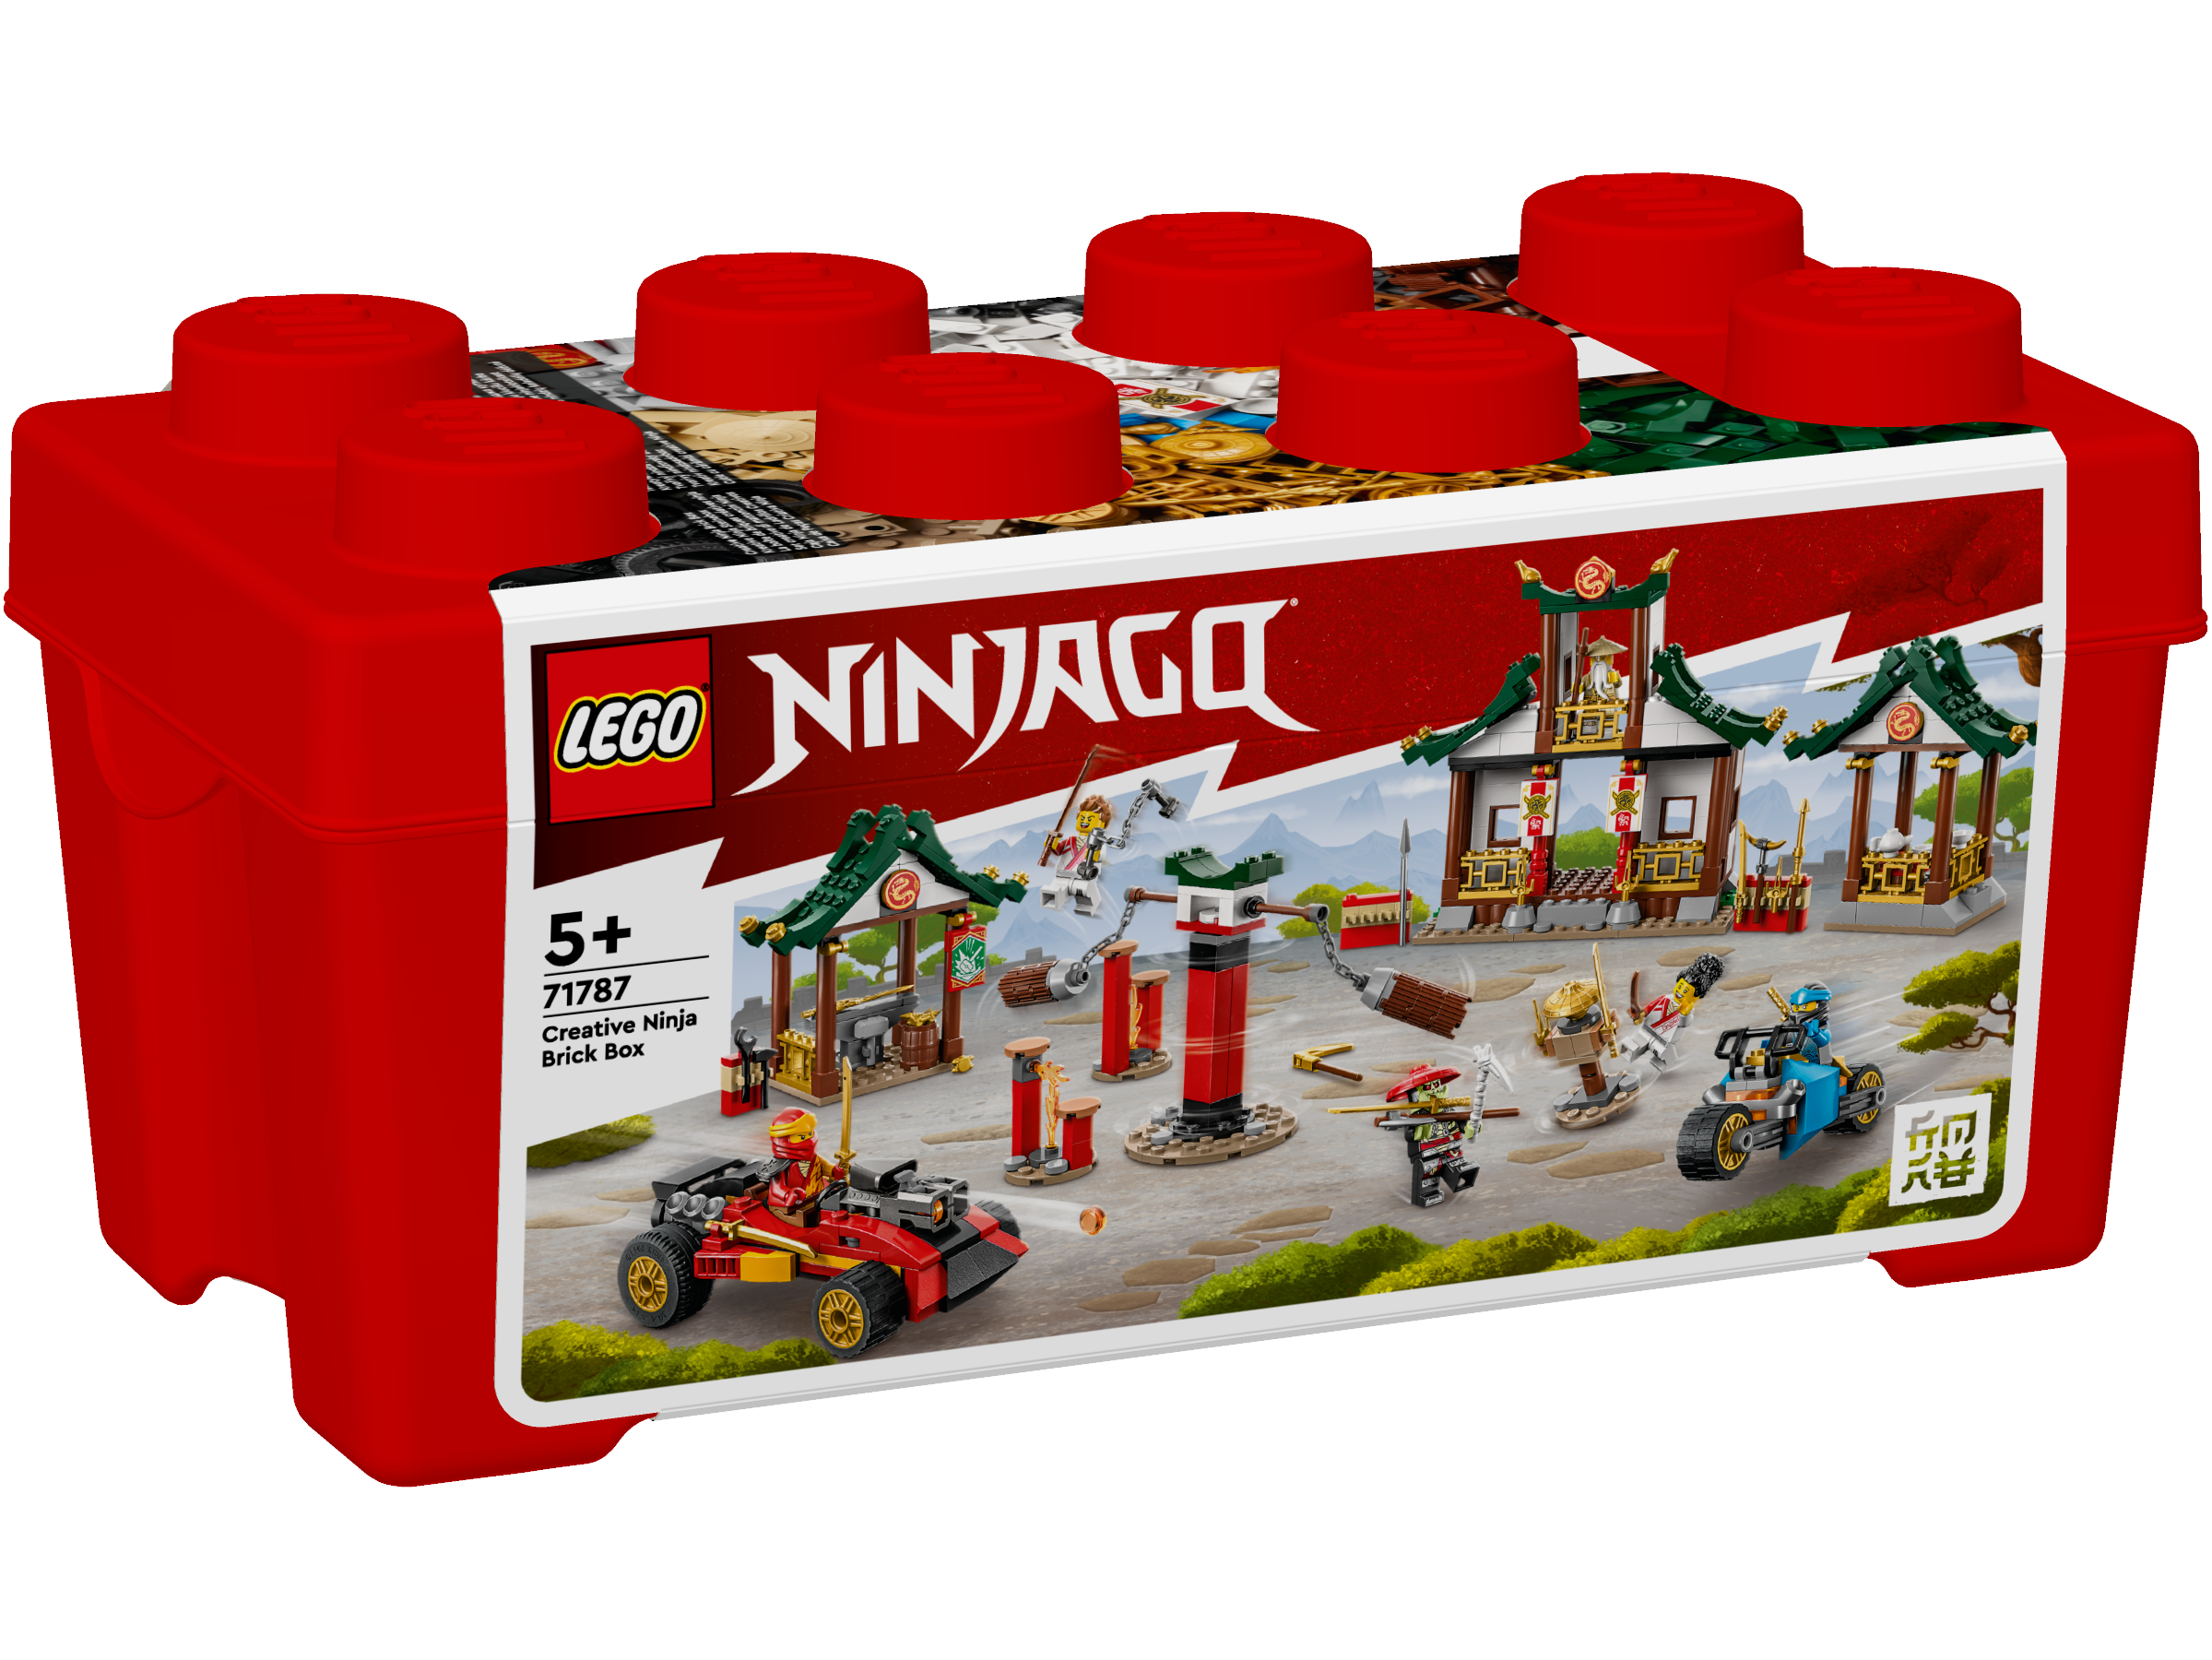 Lego 71787 Creative Ninja Brick Box